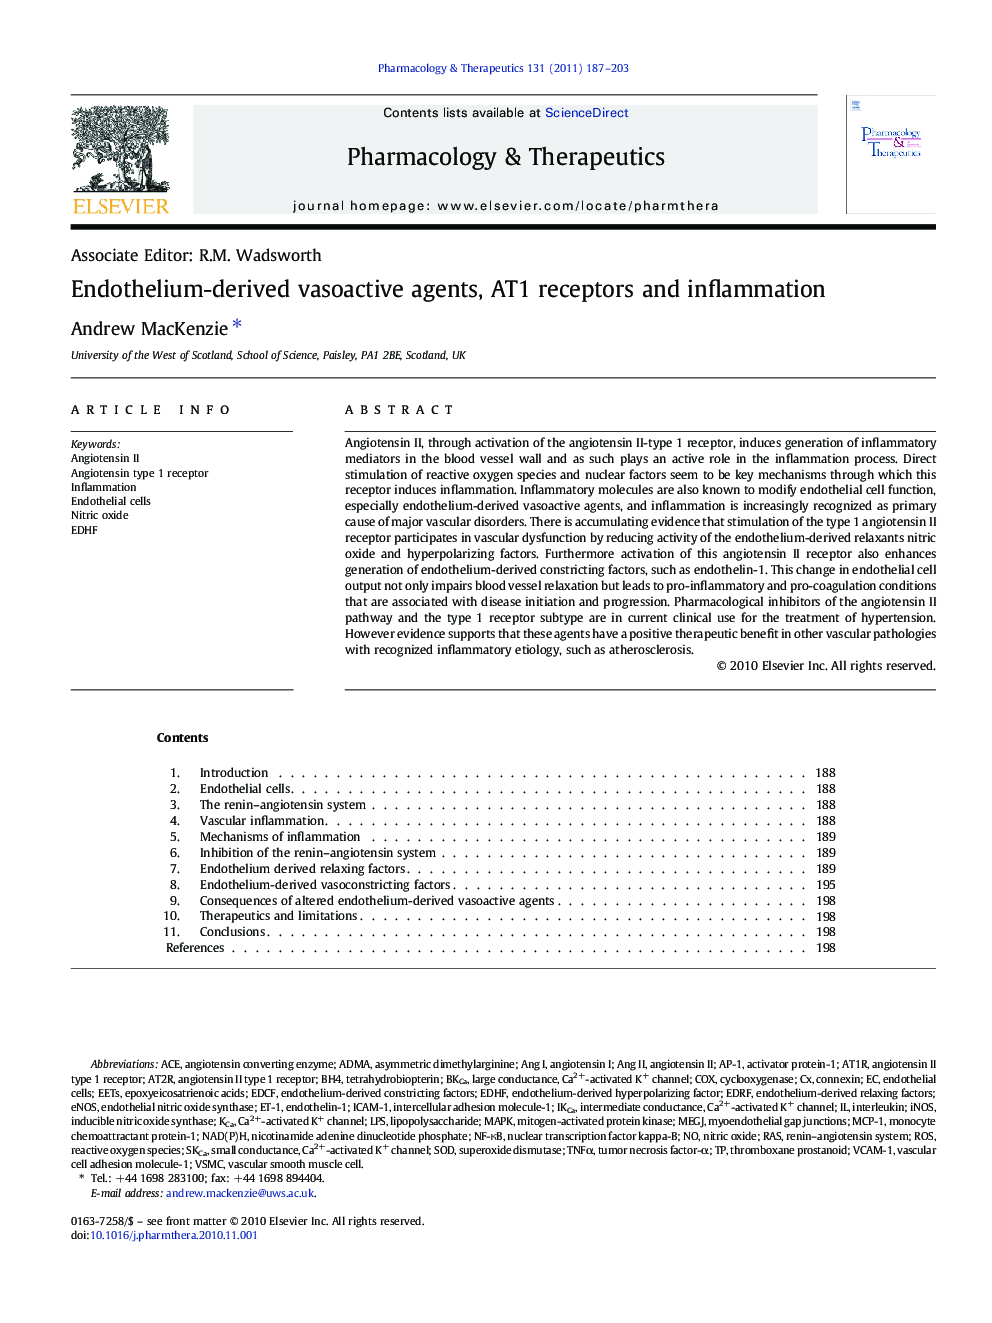 Endothelium-derived vasoactive agents, AT1 receptors and inflammation